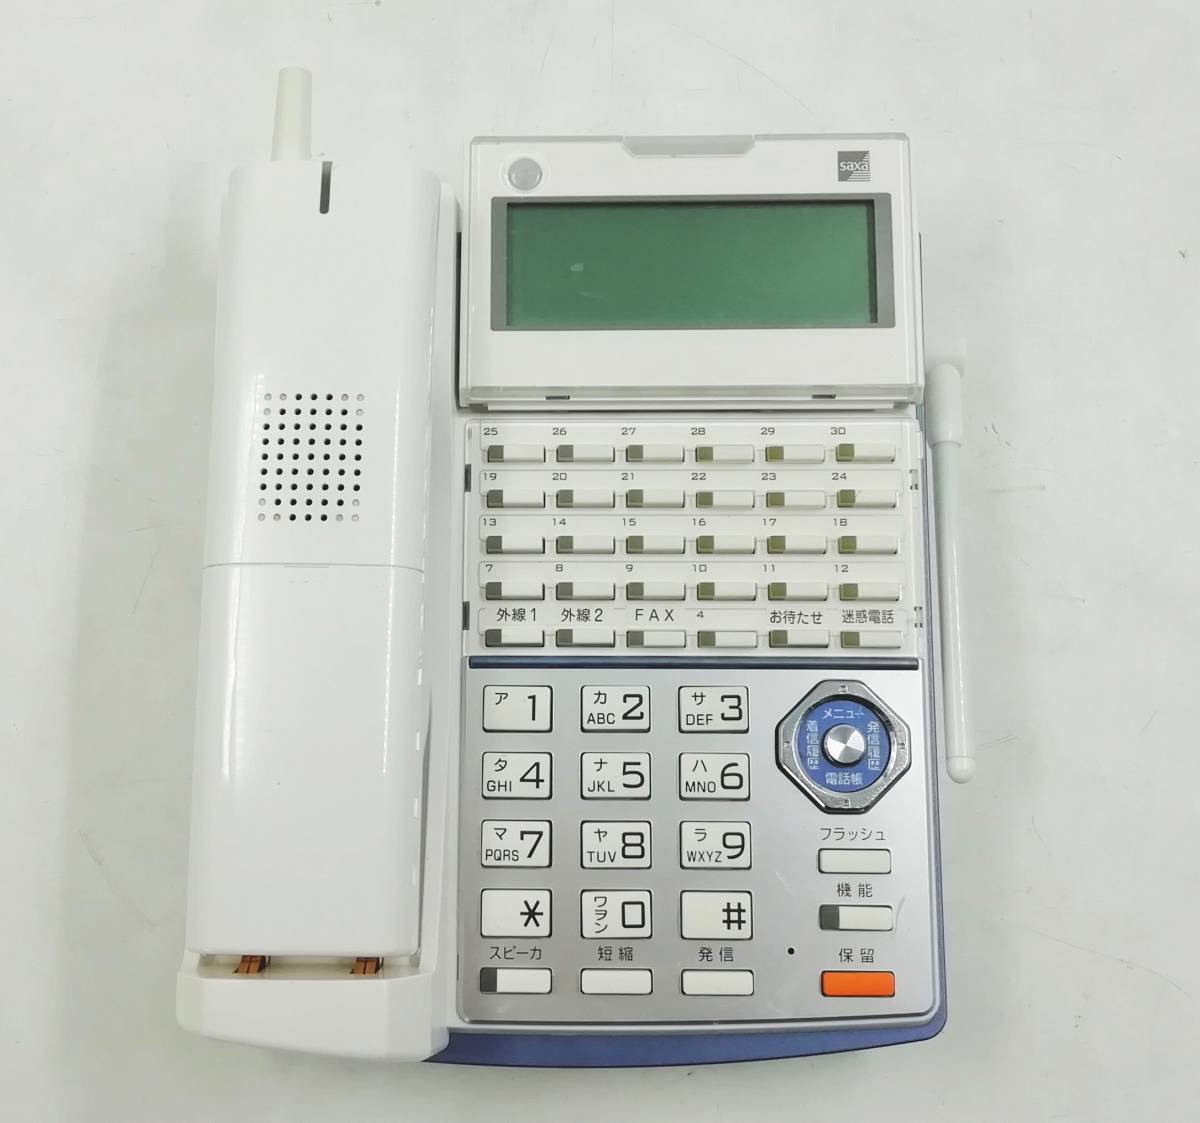 Saxa/サクサ 主装置 PT1000ⅡStd 電話機 CL820(W)ｘ2台セット 動作確認